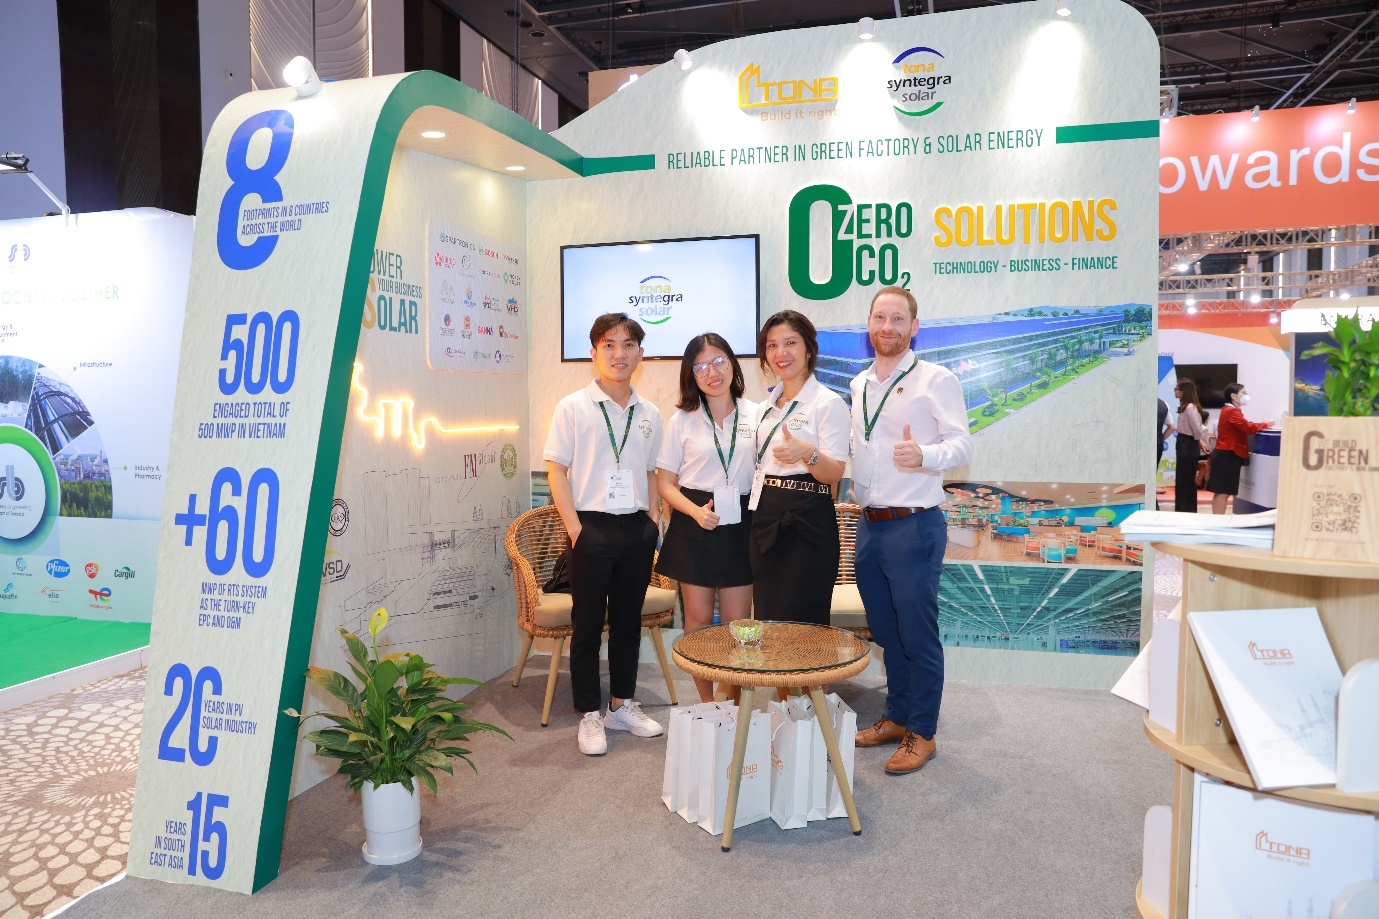 Tona Syntegra Solar's booth in the Green Economy Forum & Exhibition 2022